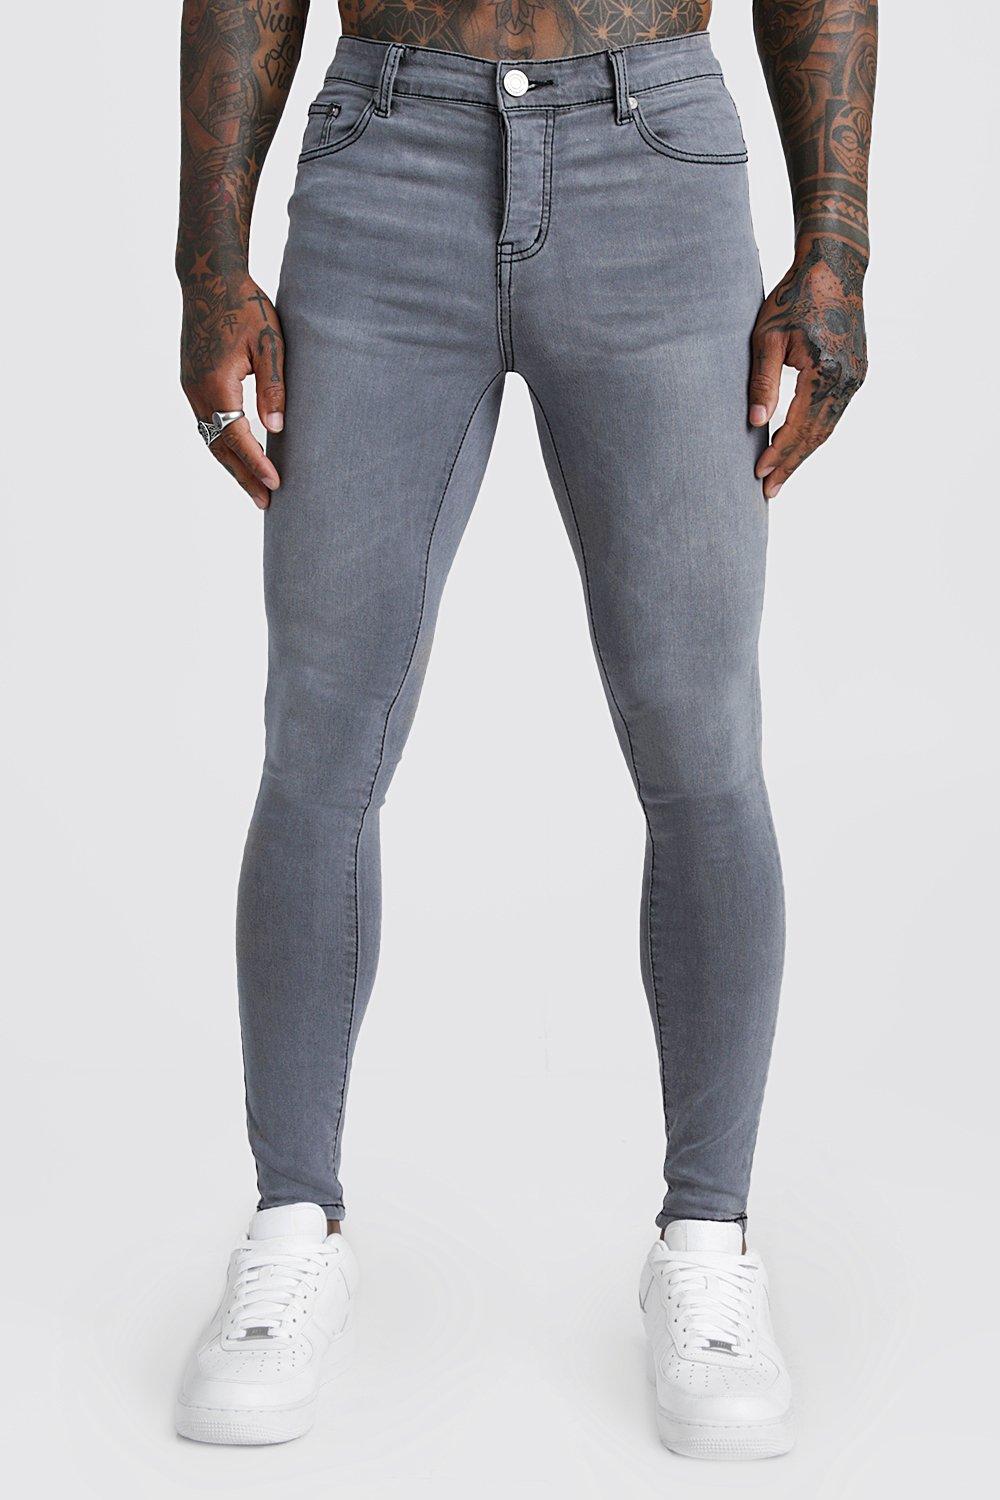 mens grey jeans australia